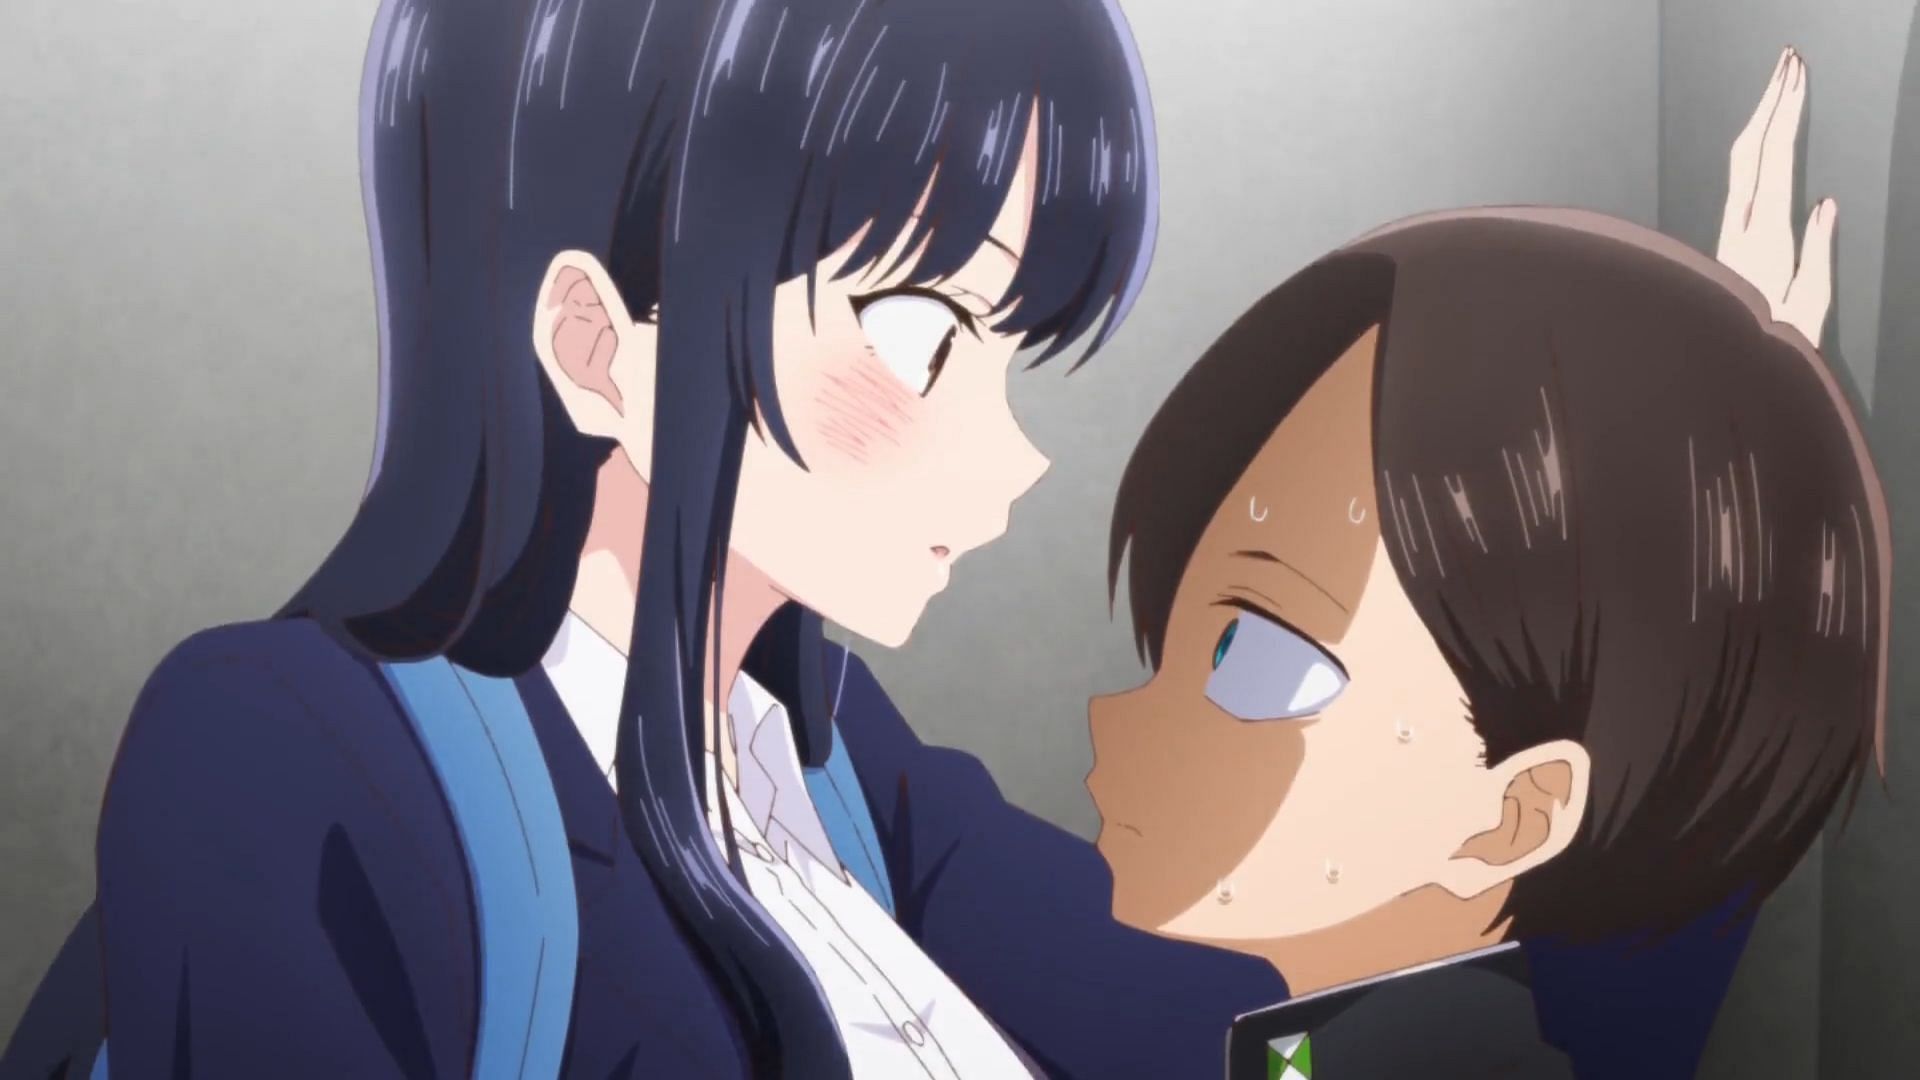 Yamada Anna and Ichikawa Kyotaro as seen in The Dangers in My Heart episode 5